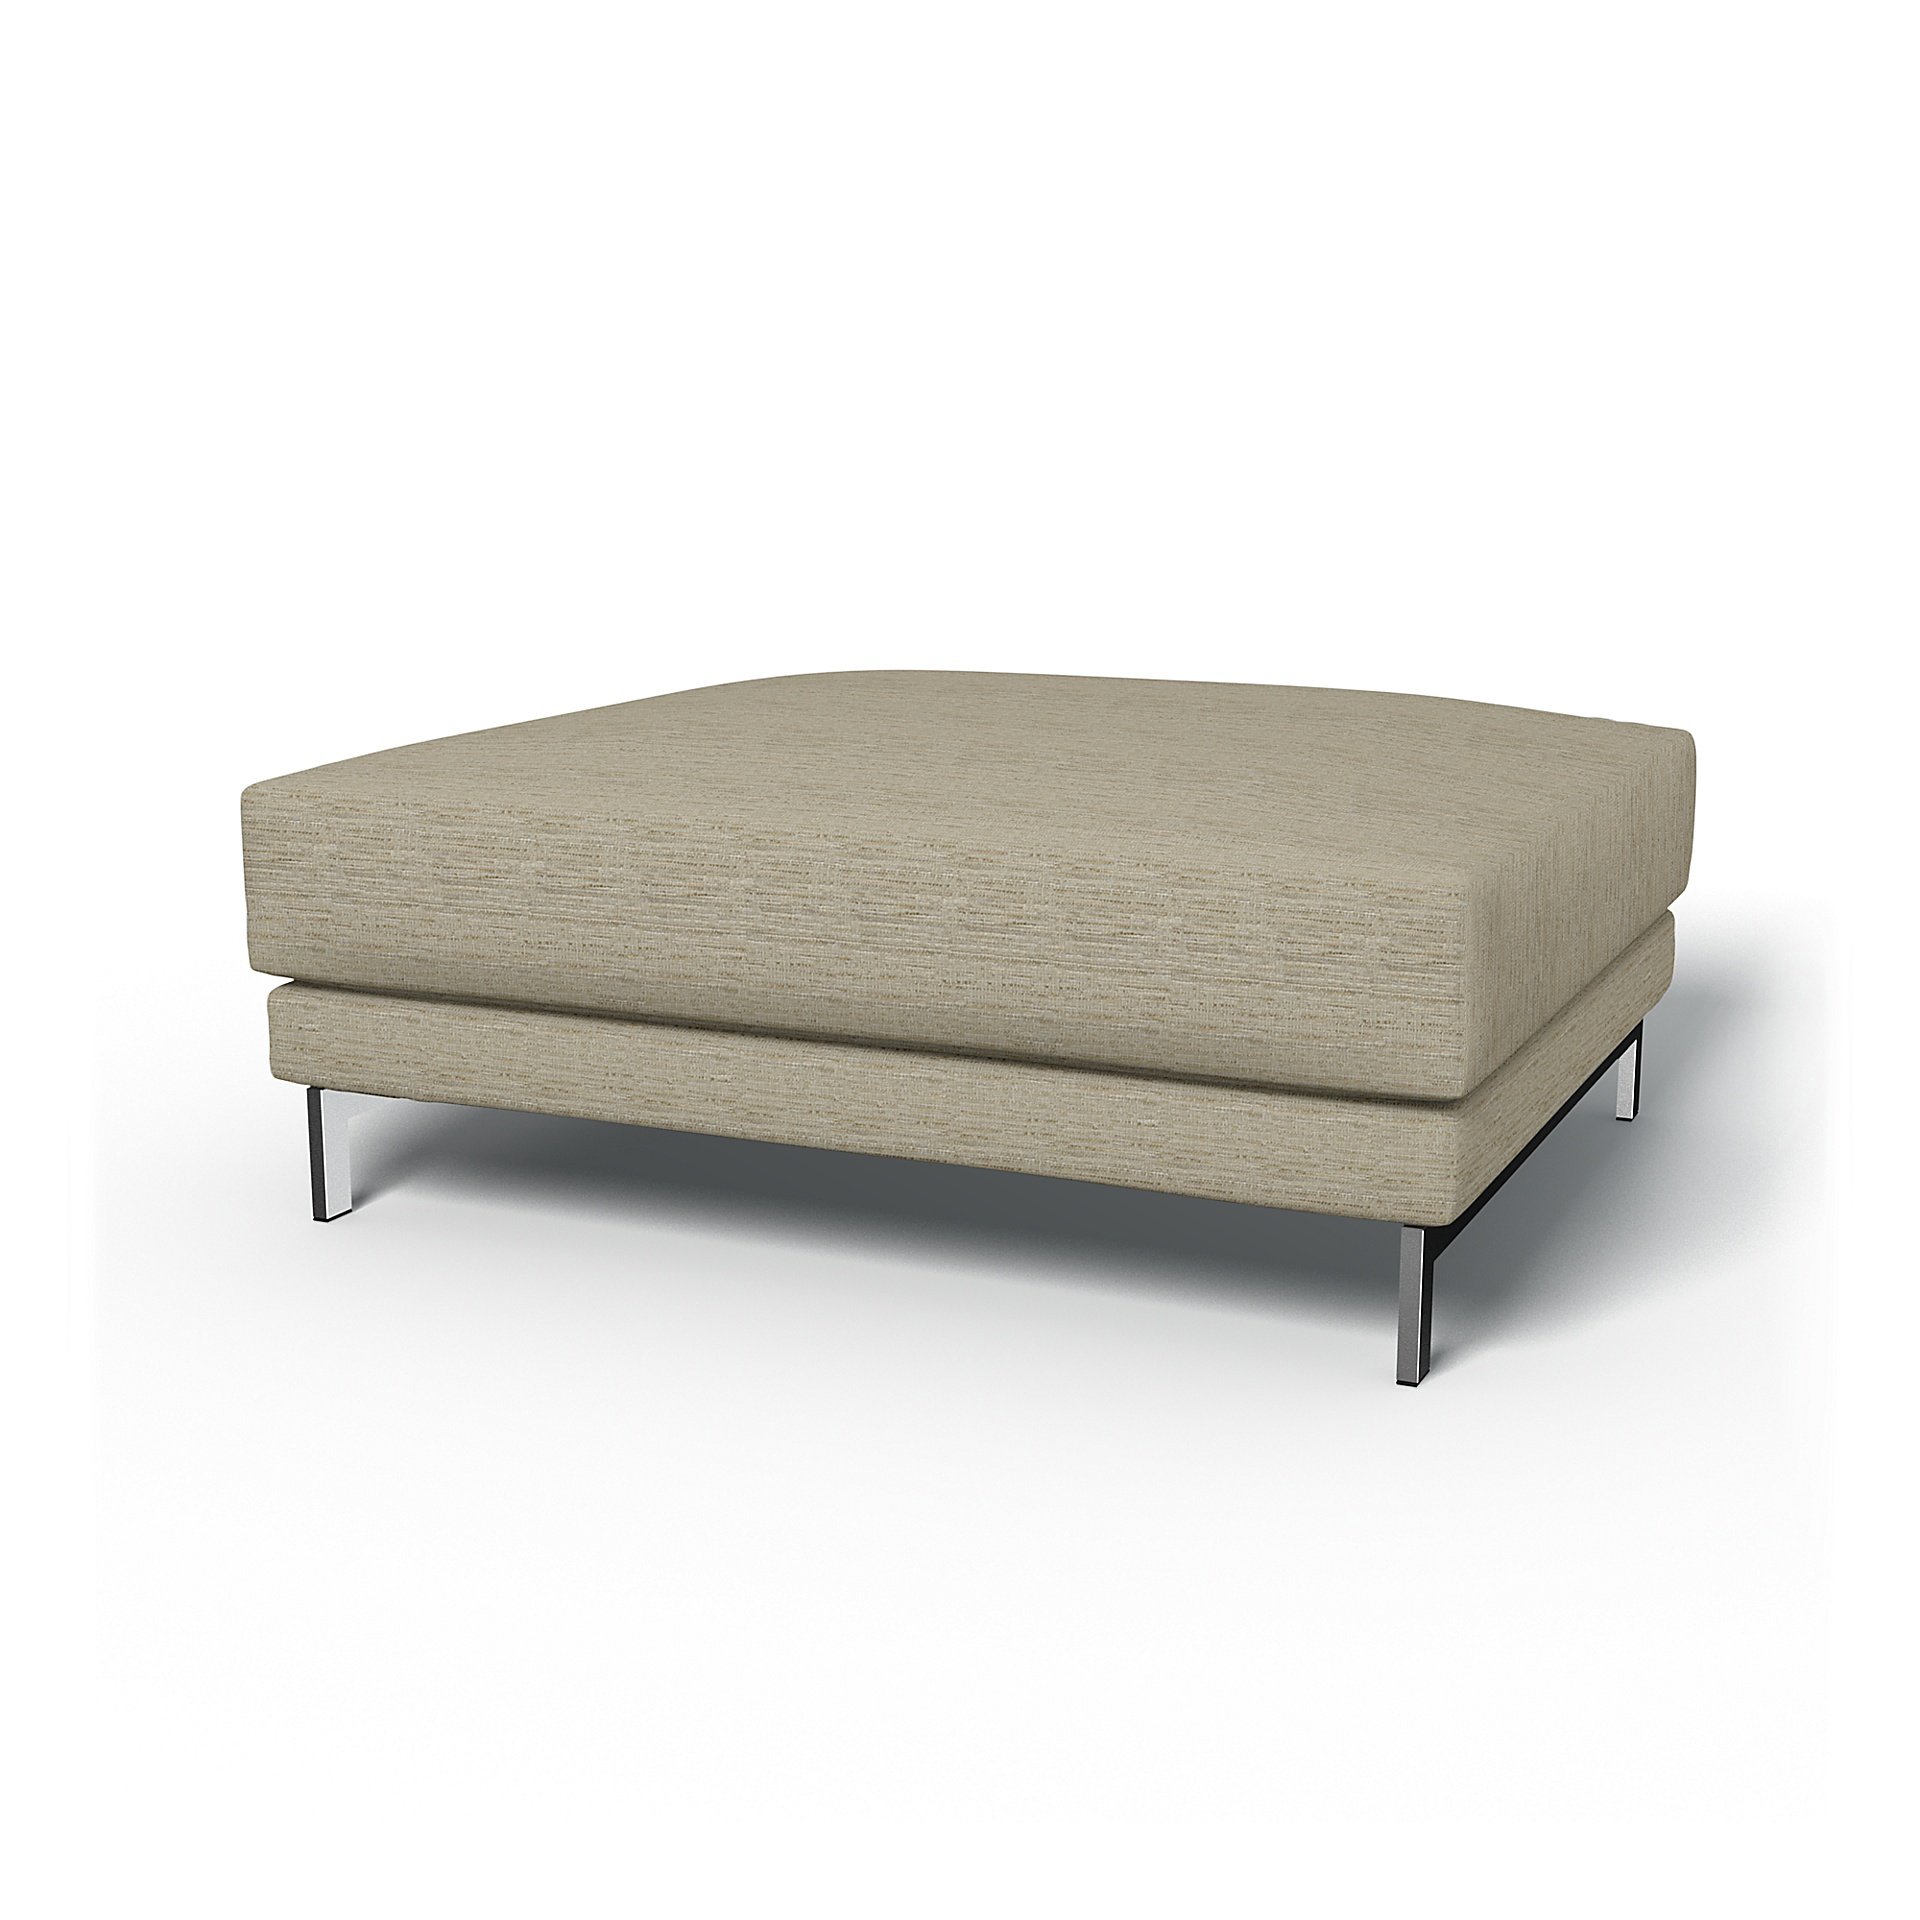 IKEA - Nockeby Footstool Cover, Light Sand, Boucle & Texture - Bemz